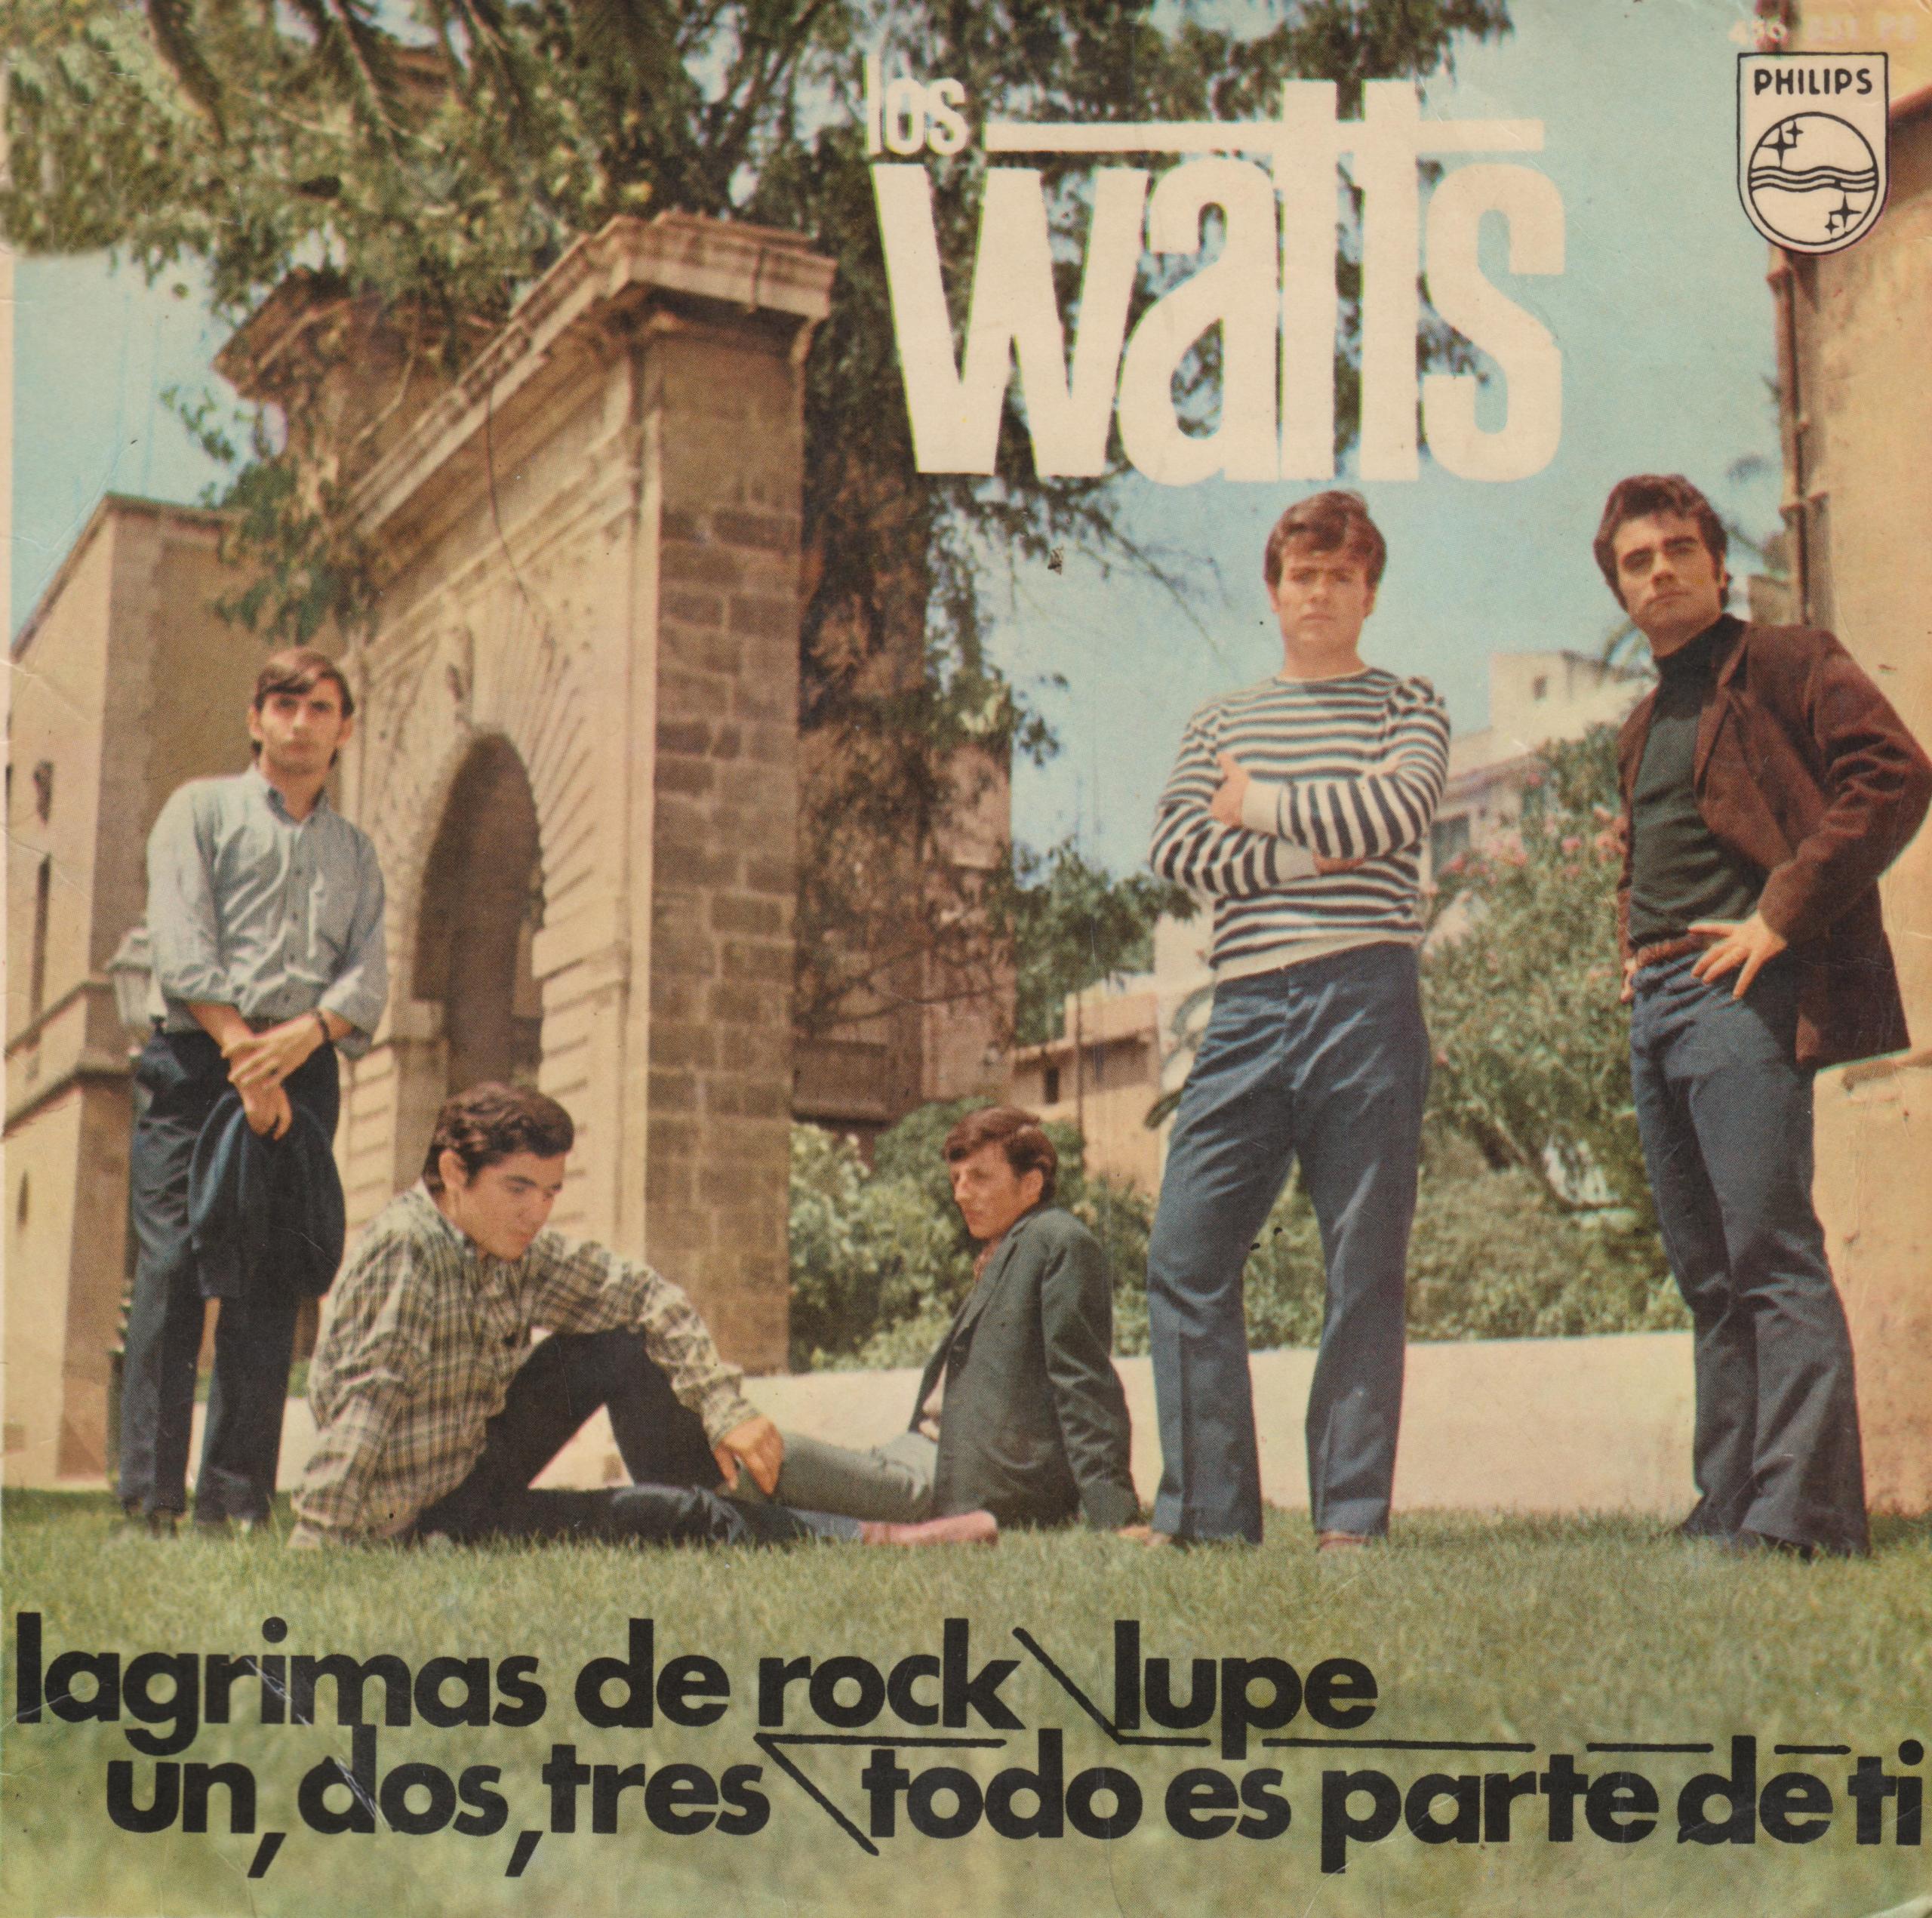 The Watts